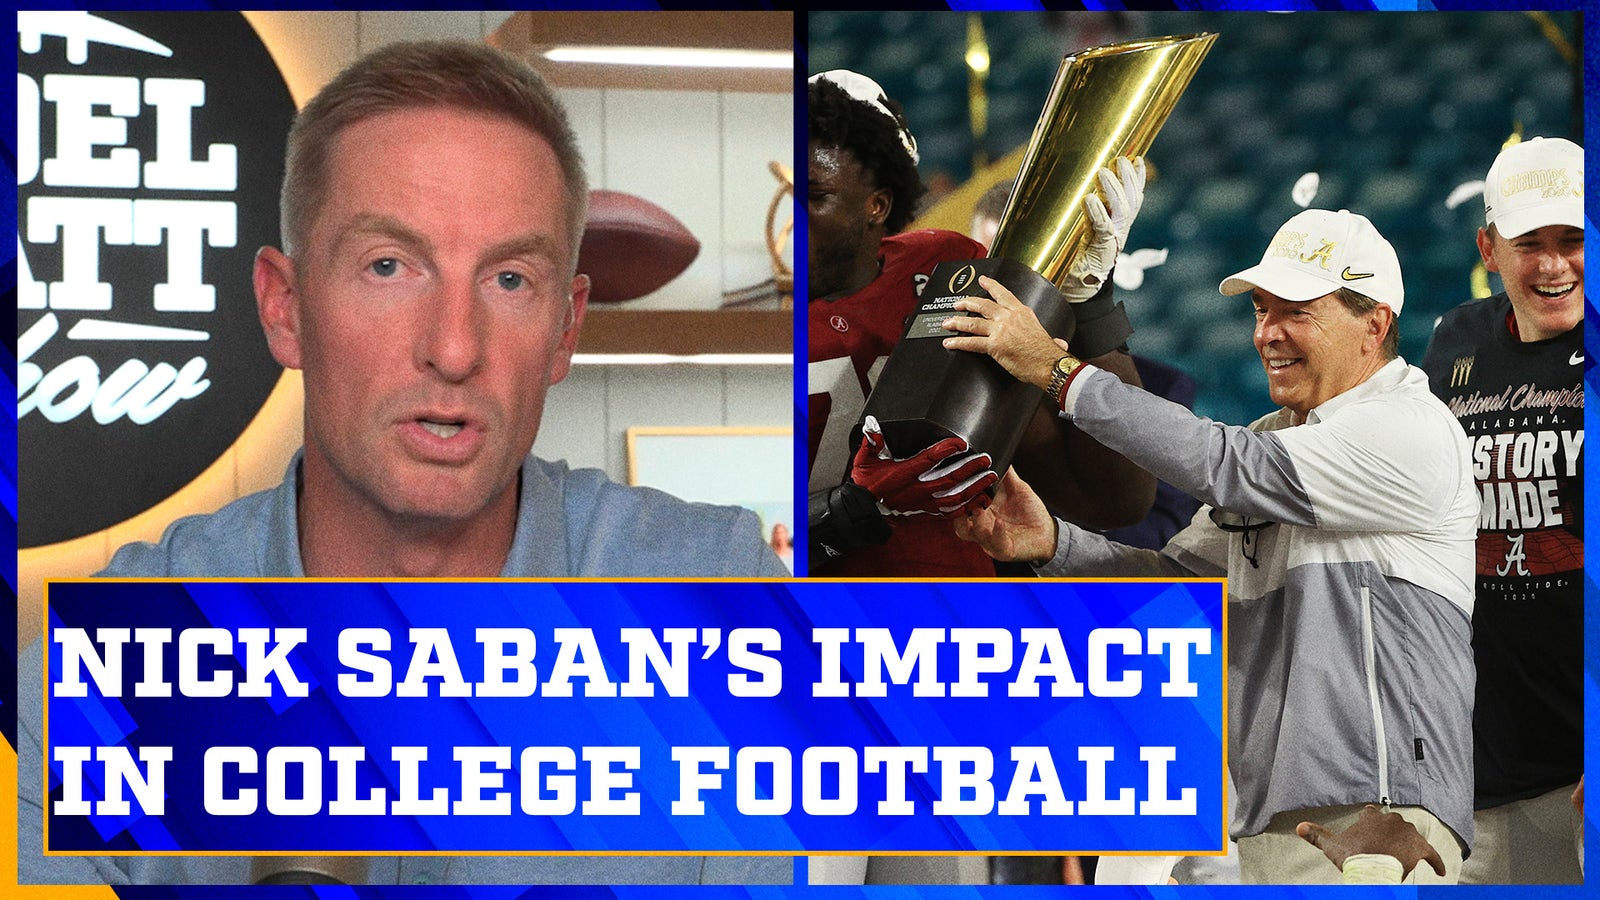 Nick Saban’s impact on college football